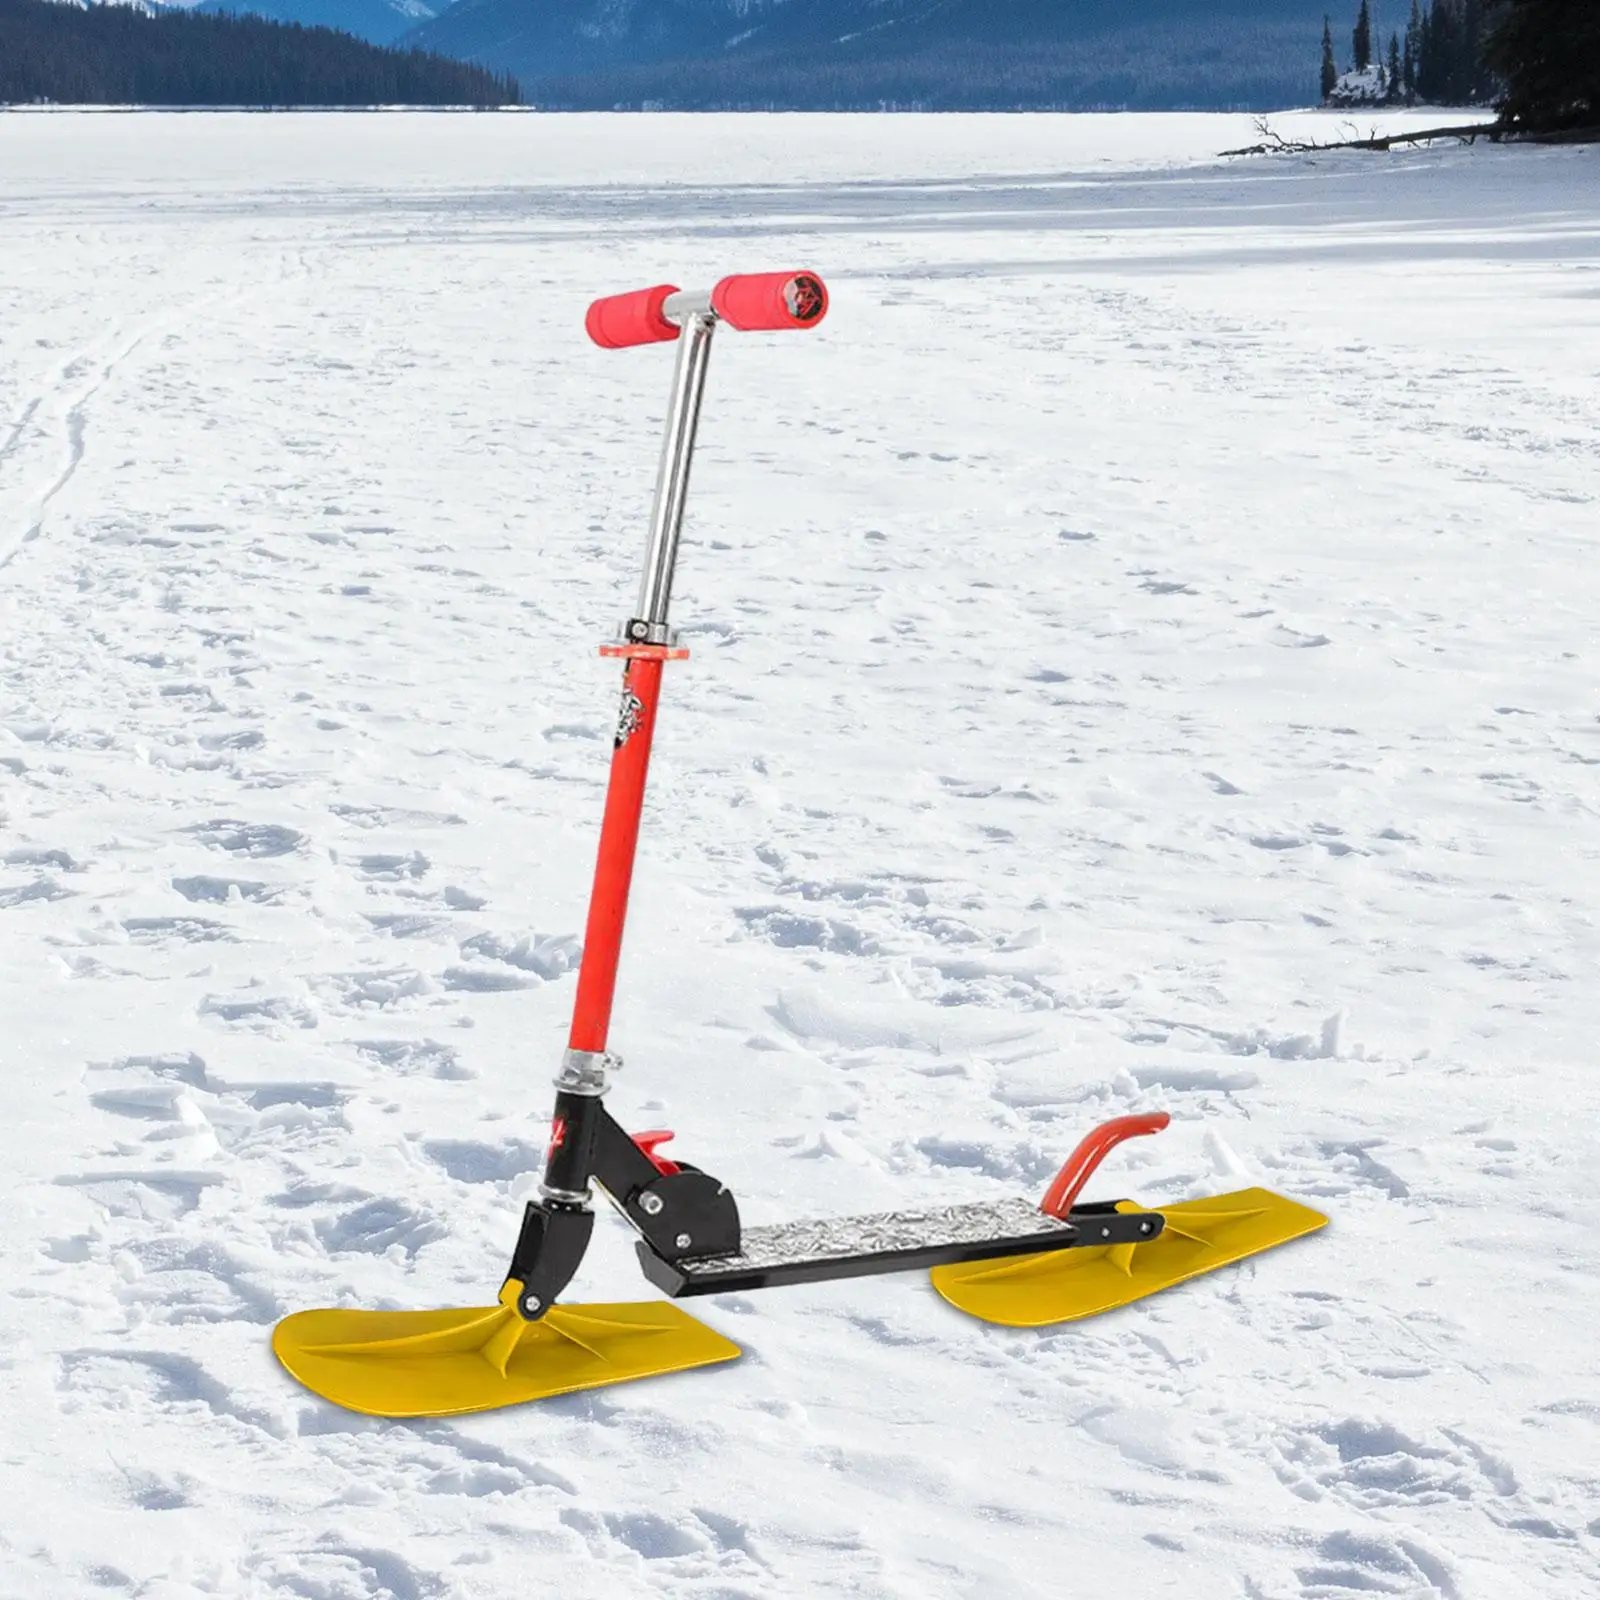 2x Snow Scooter Ski Sled Creative Ski Attachment Flat Bottom Toboggan Ski Board Sleigh for Snowboard Outdoor Christmas Children